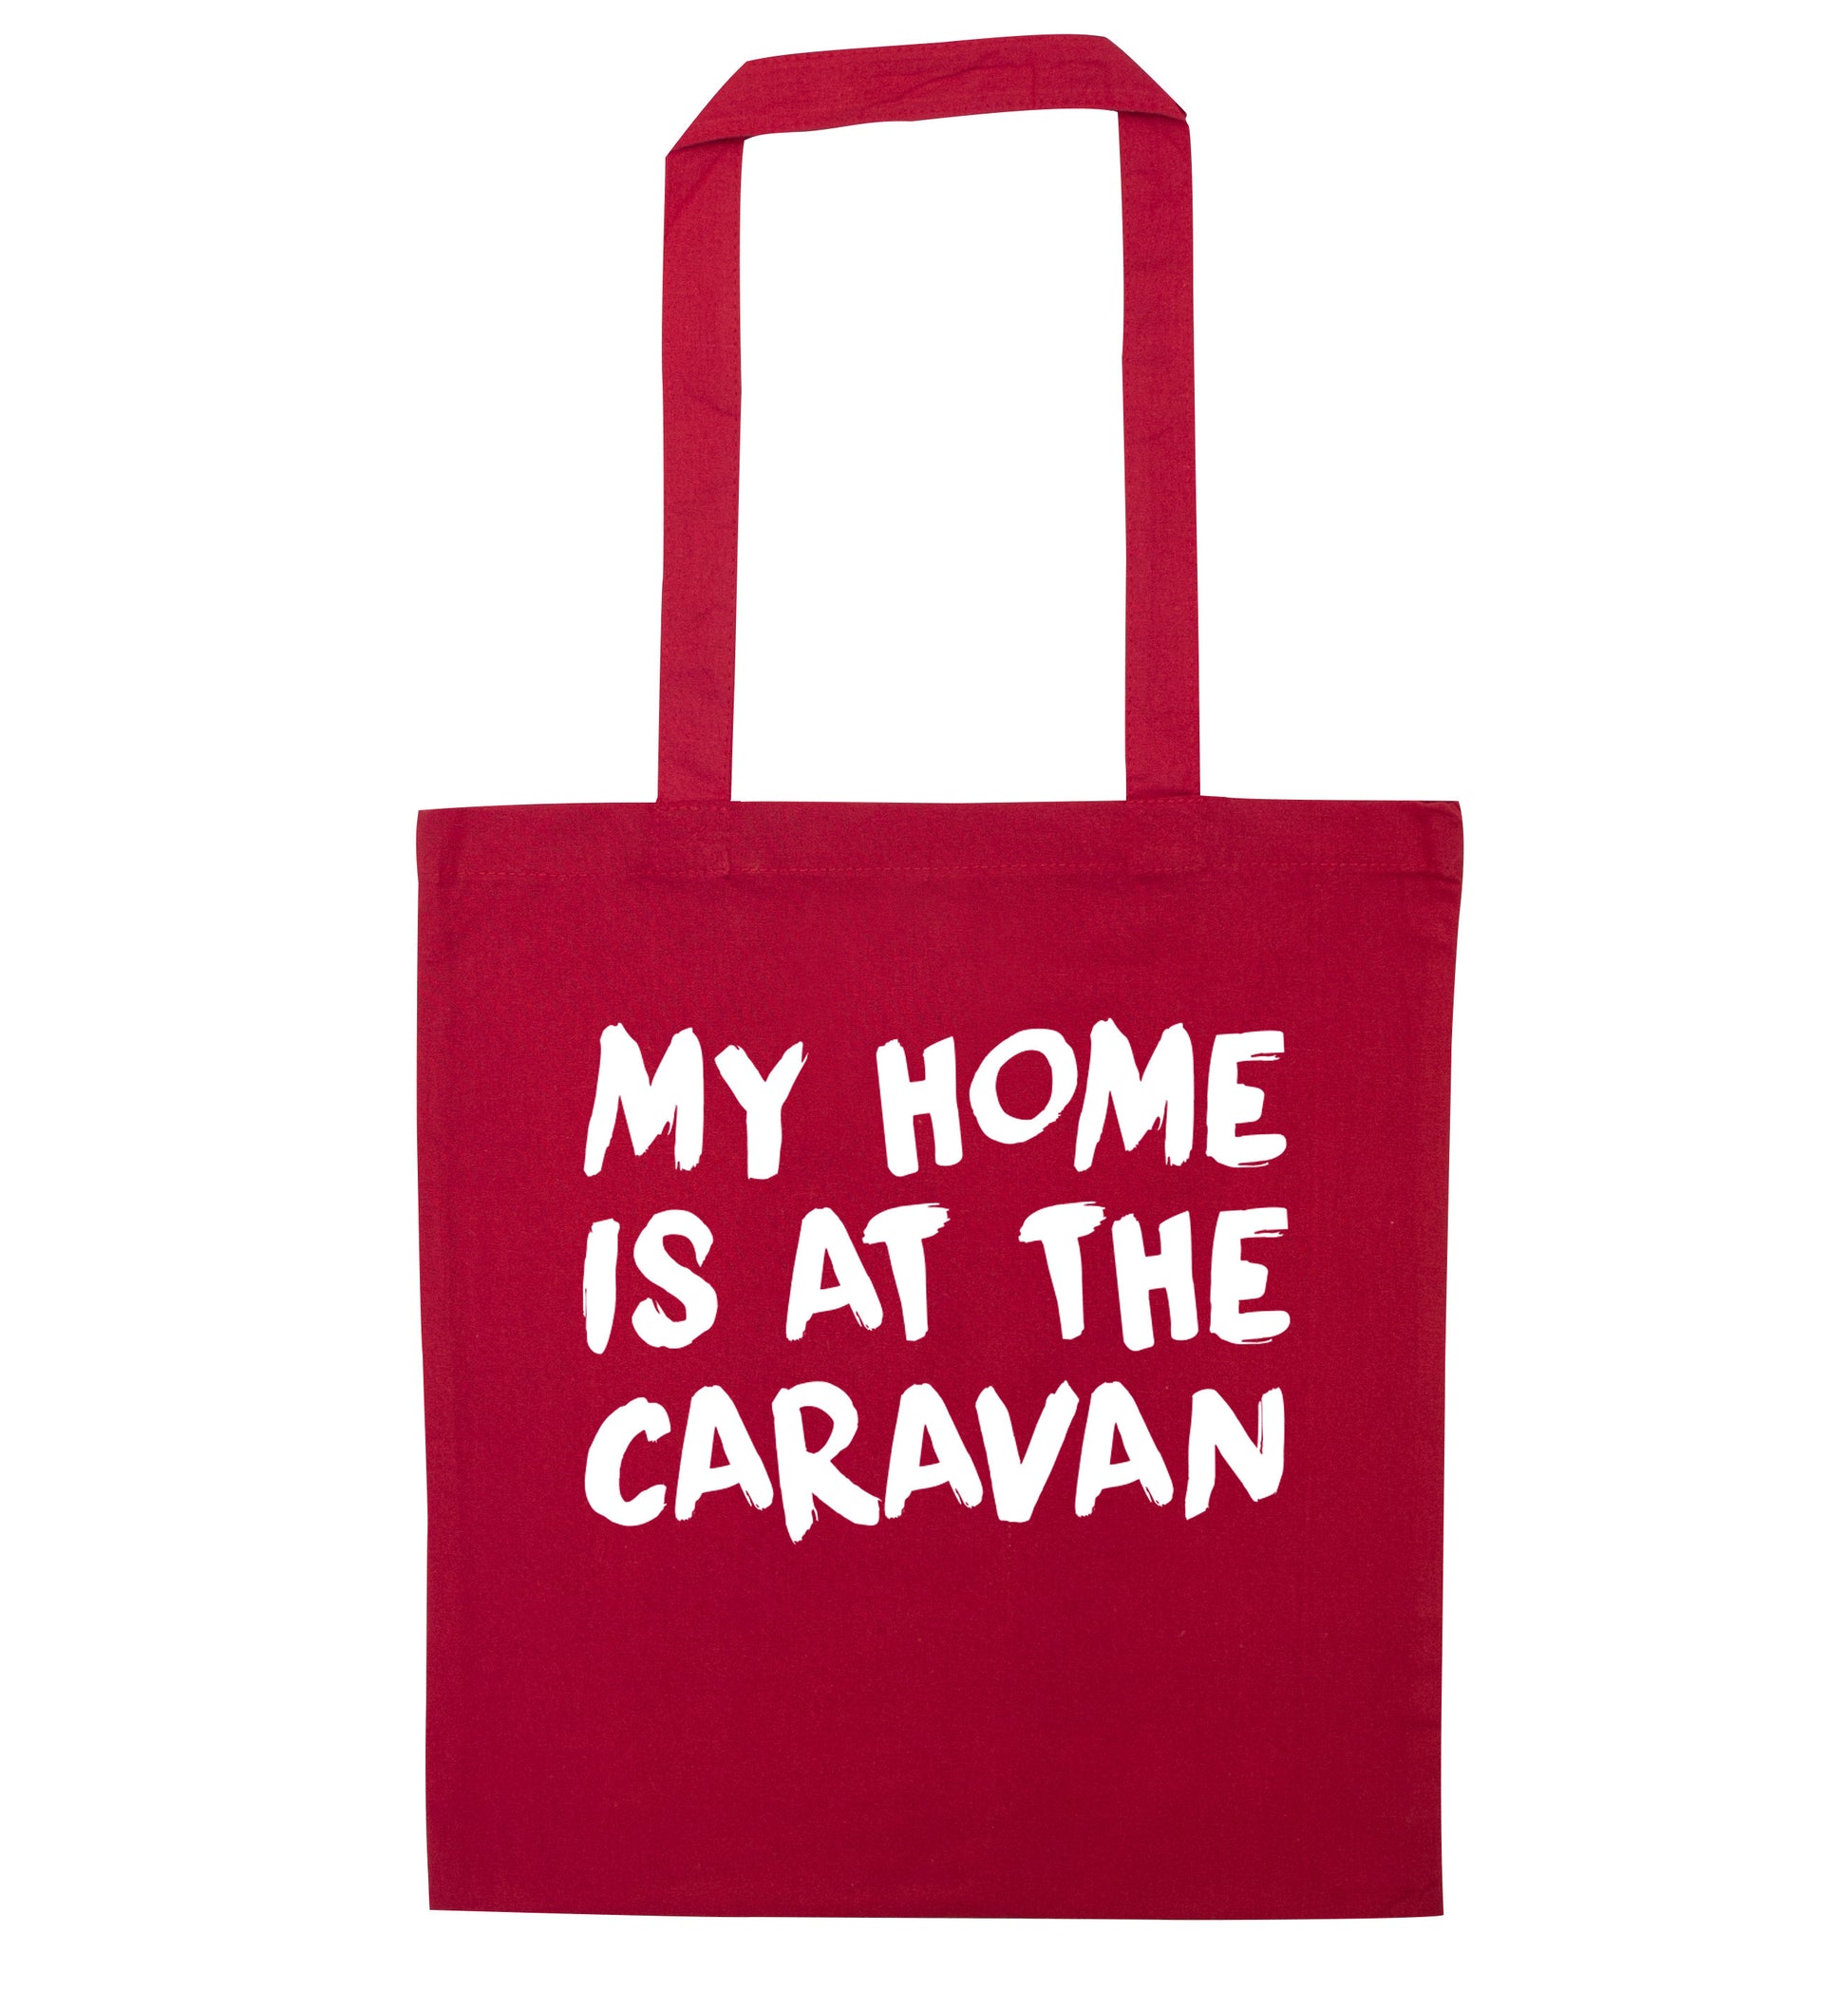 My home is at the caravan red tote bag